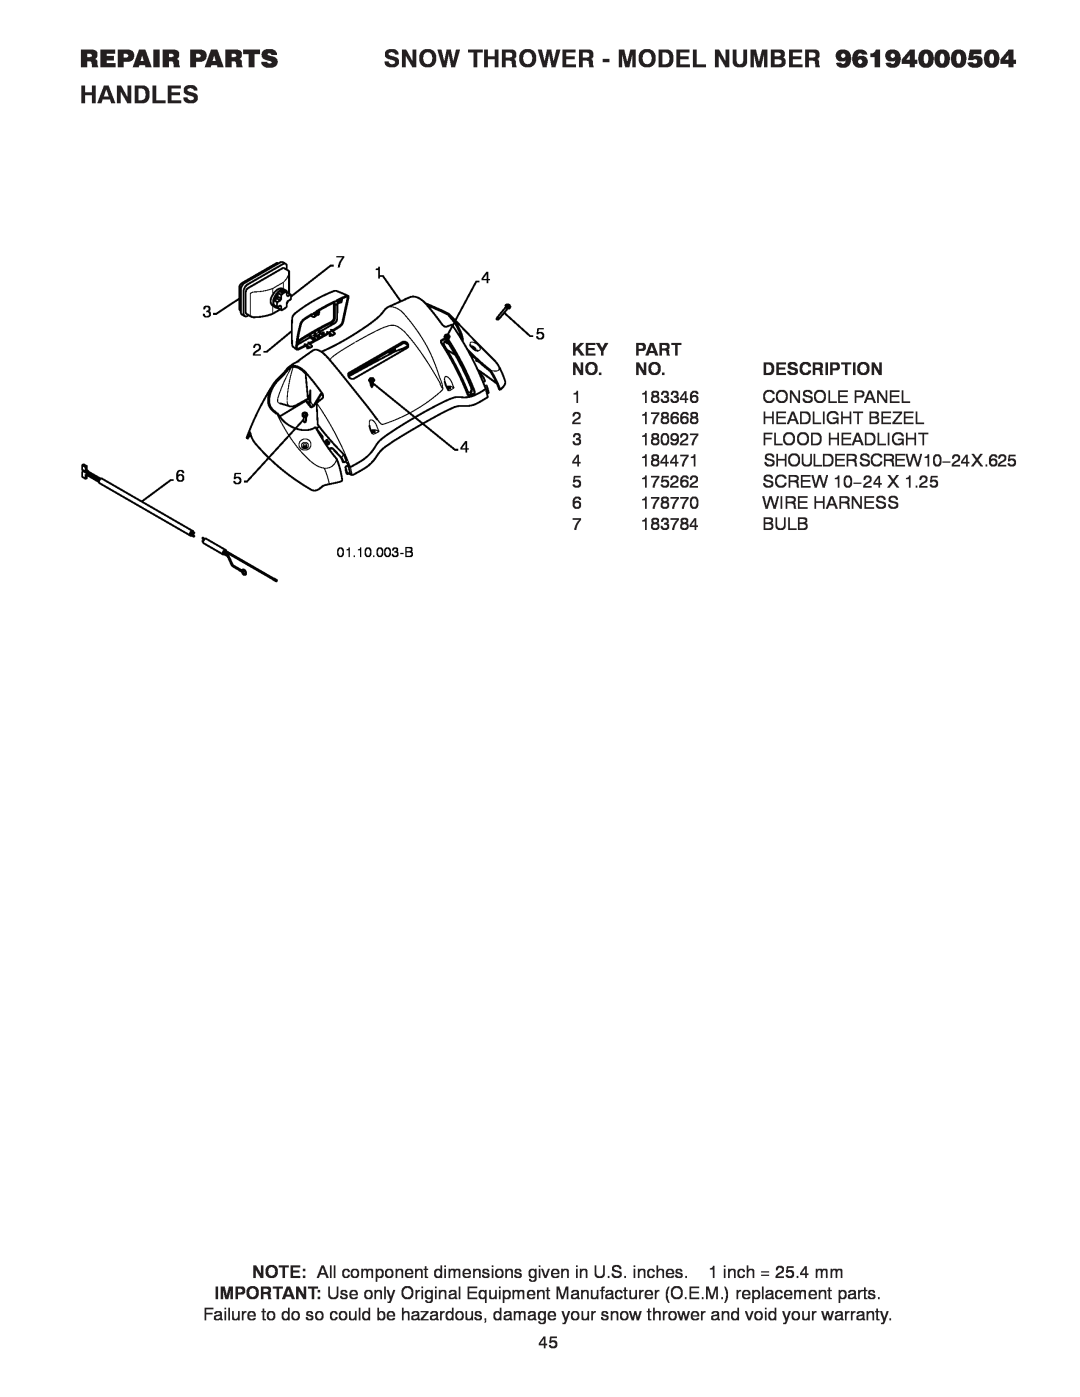 Poulan owner manual REPAIR PARTS SNOW THROWER - MODEL NUMBER 96194000504 HANDLES, Part, Description, 01.10.003-B 